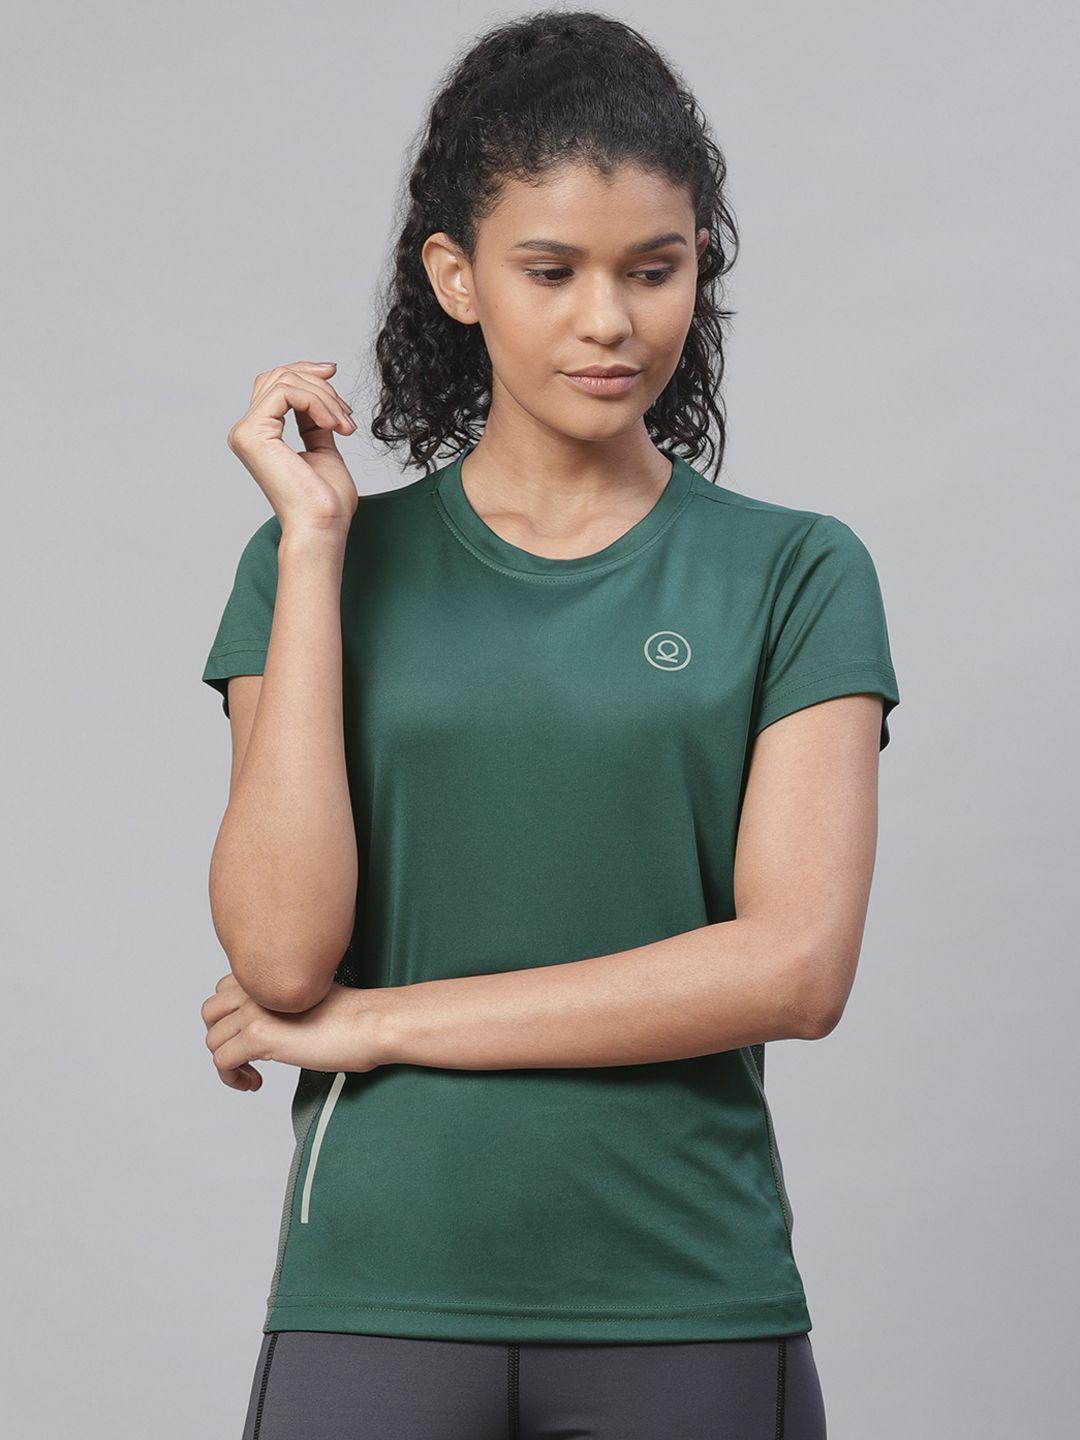 chkokko-women-teal-green-solid-round-neck-training-t-shirt